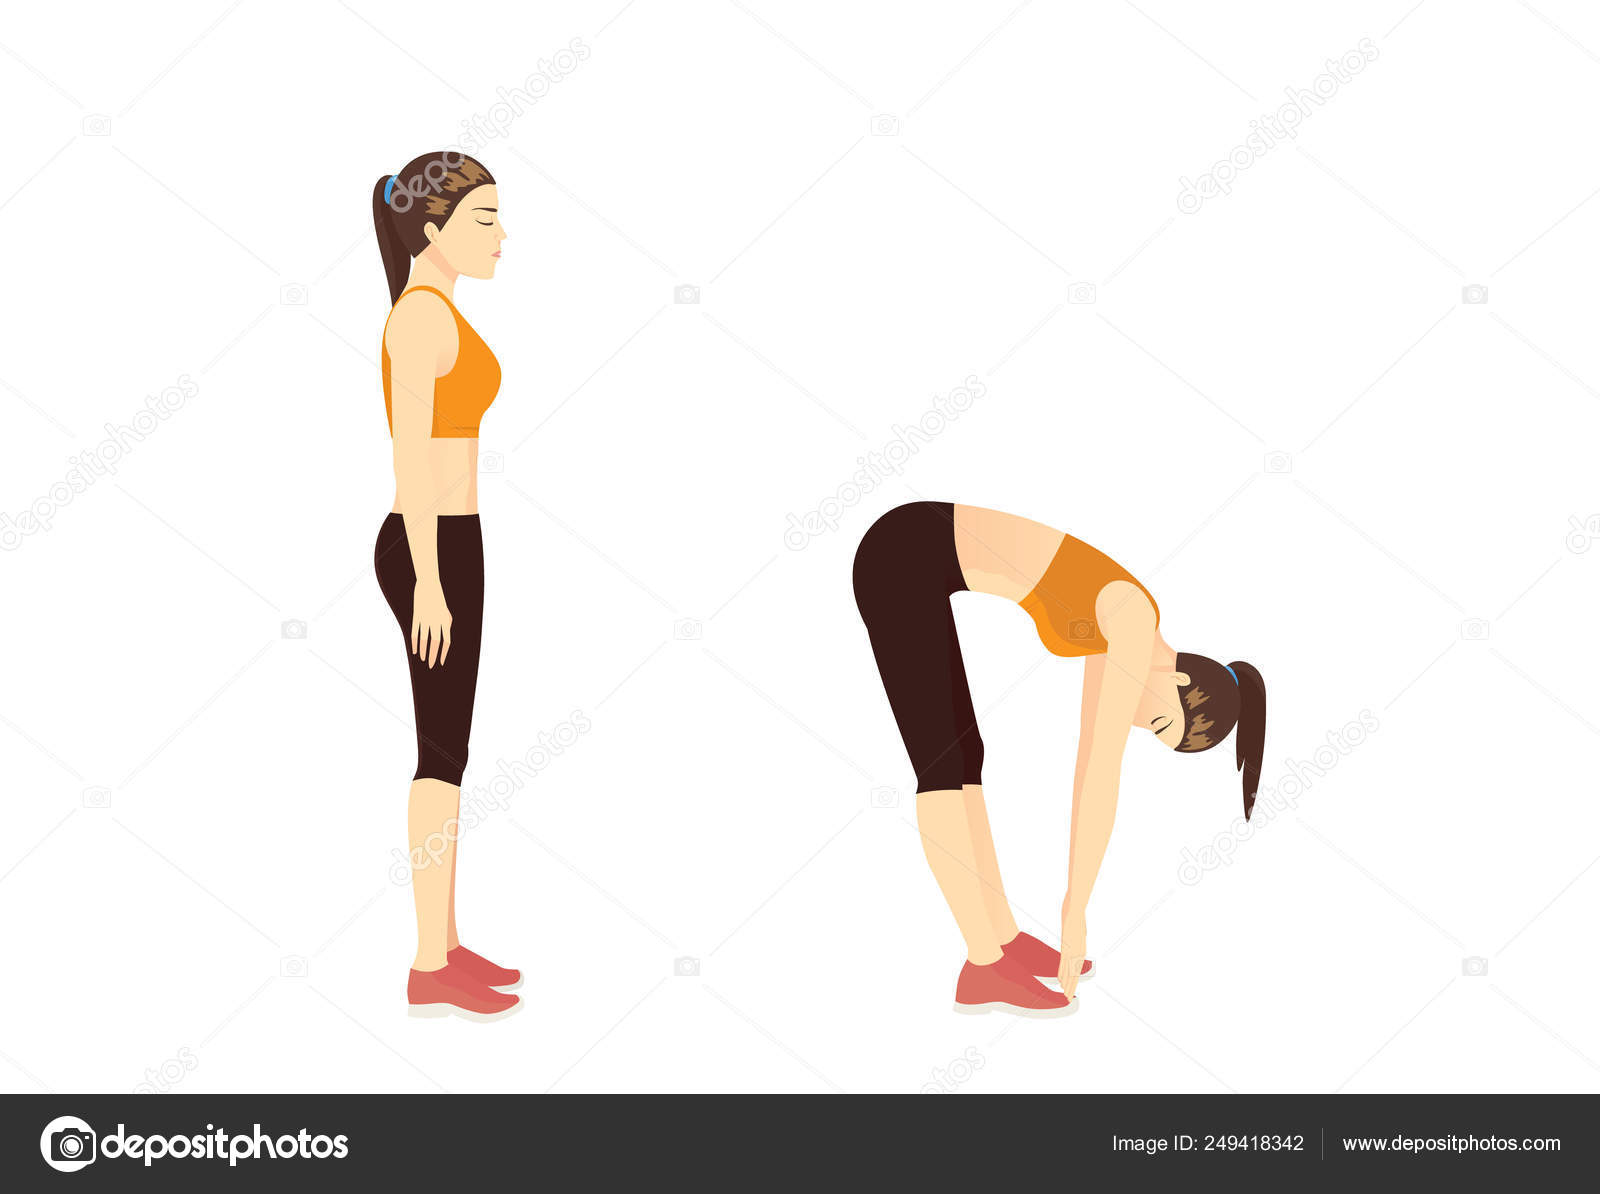 Kneeling Yoga Poses